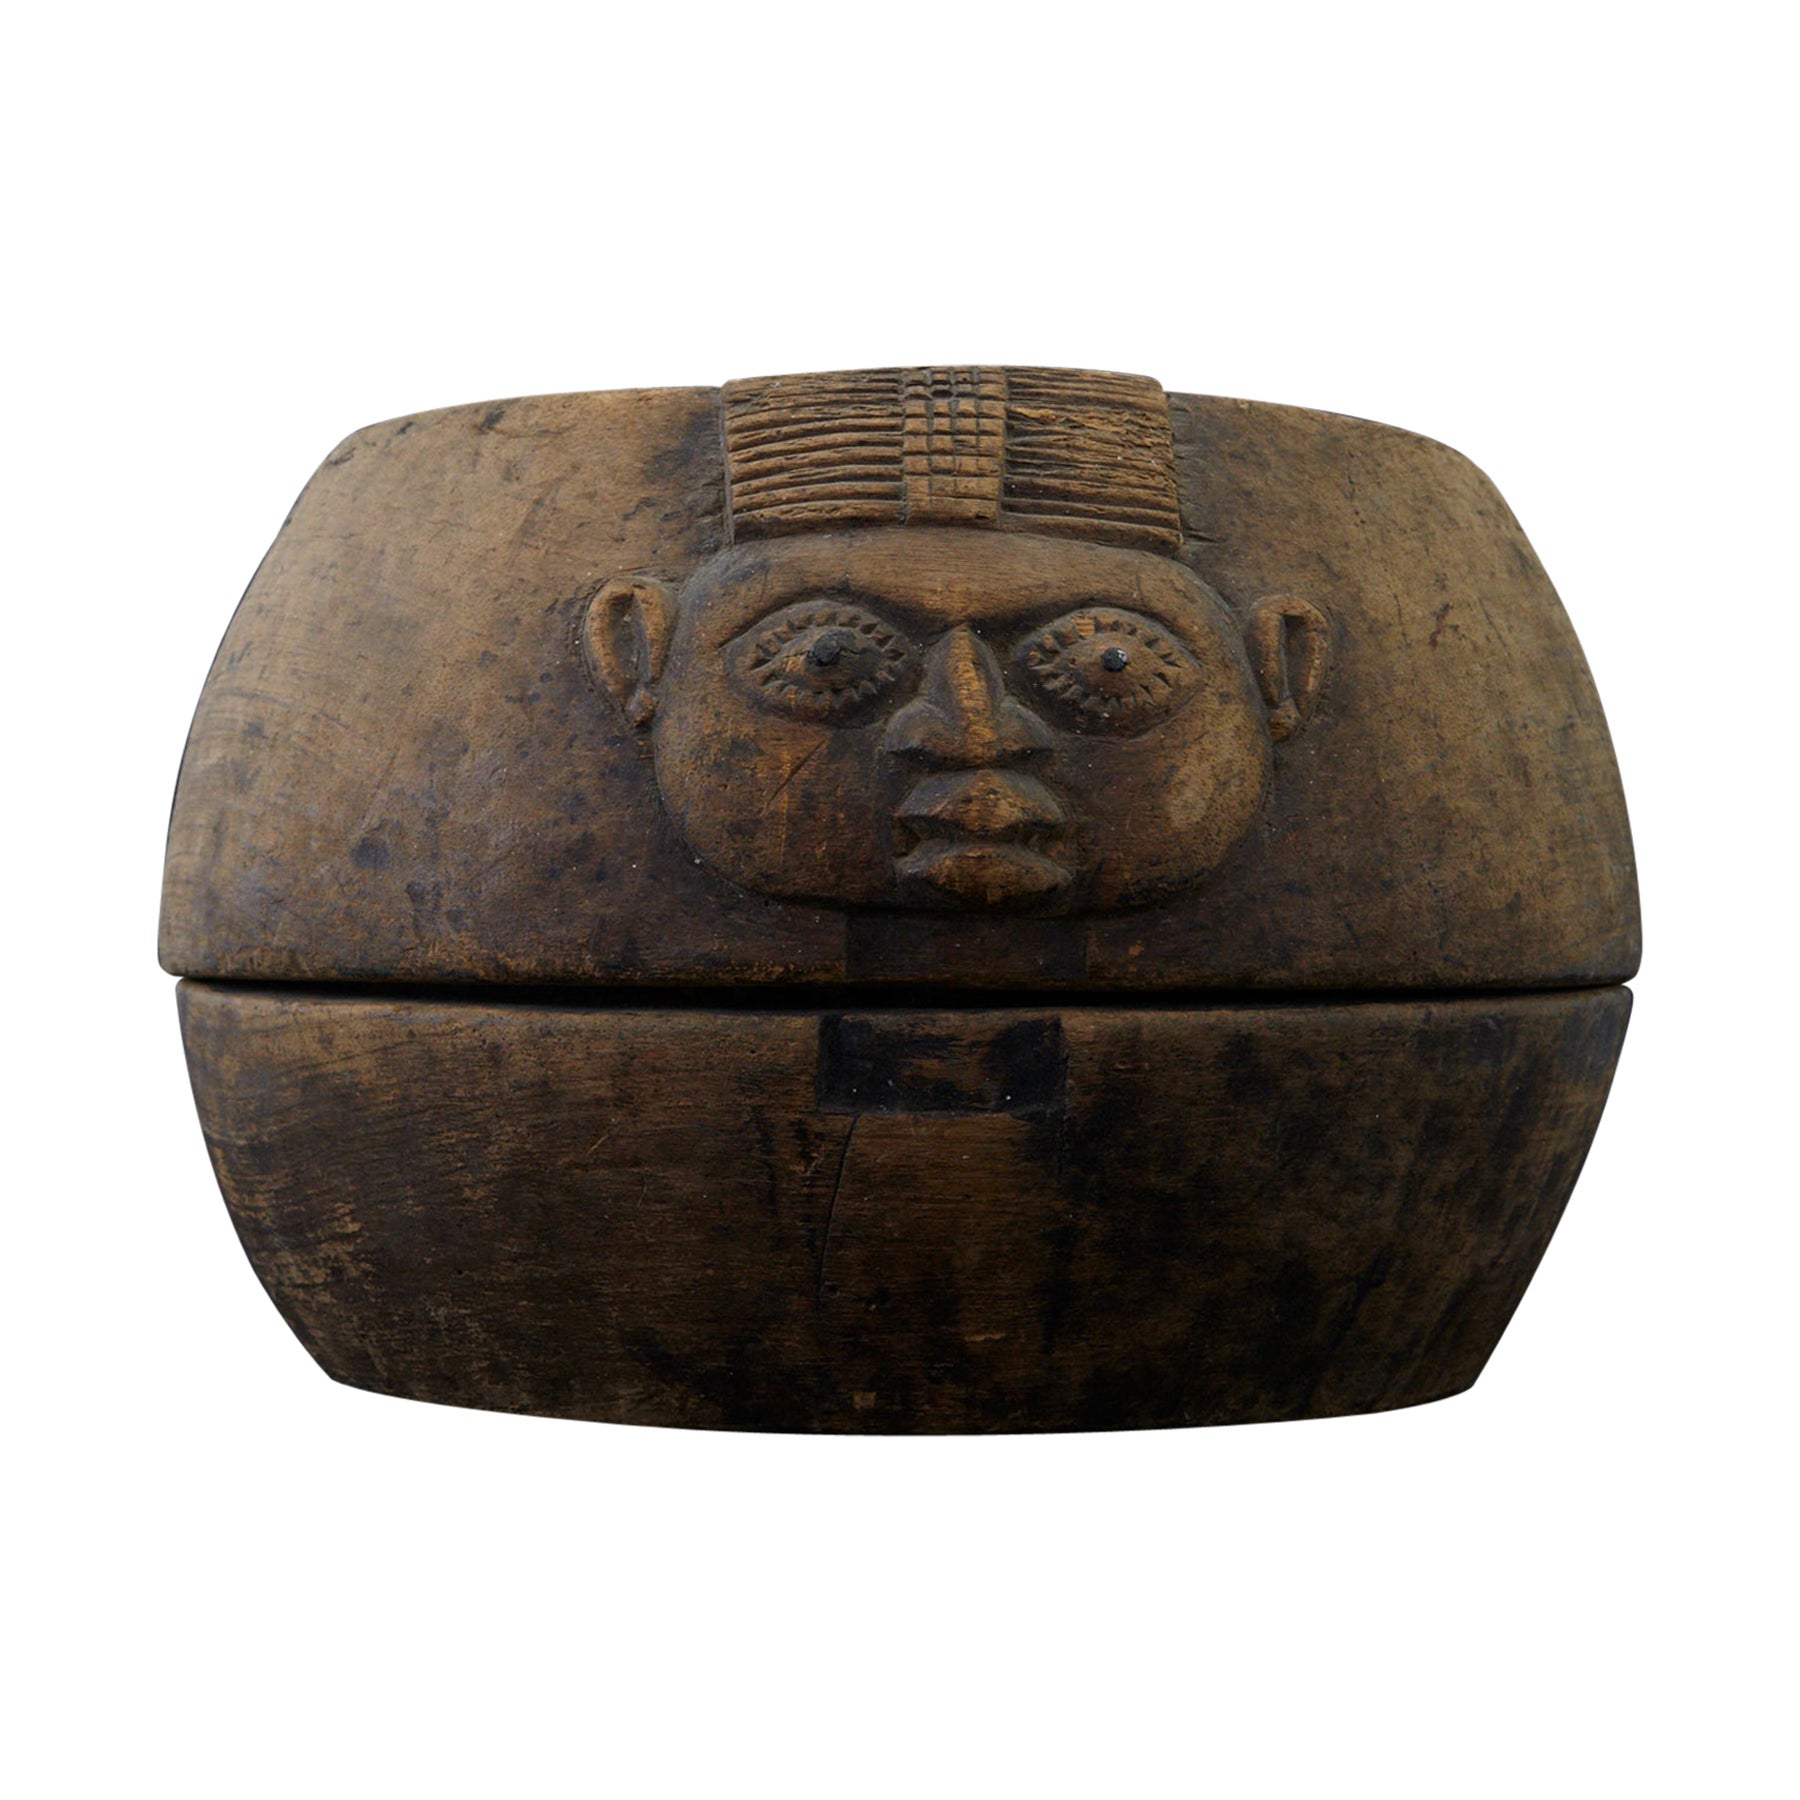 Opon Igede Ifa - Divination Bowl, Yoruba People, Nigeria, Early 20th Century